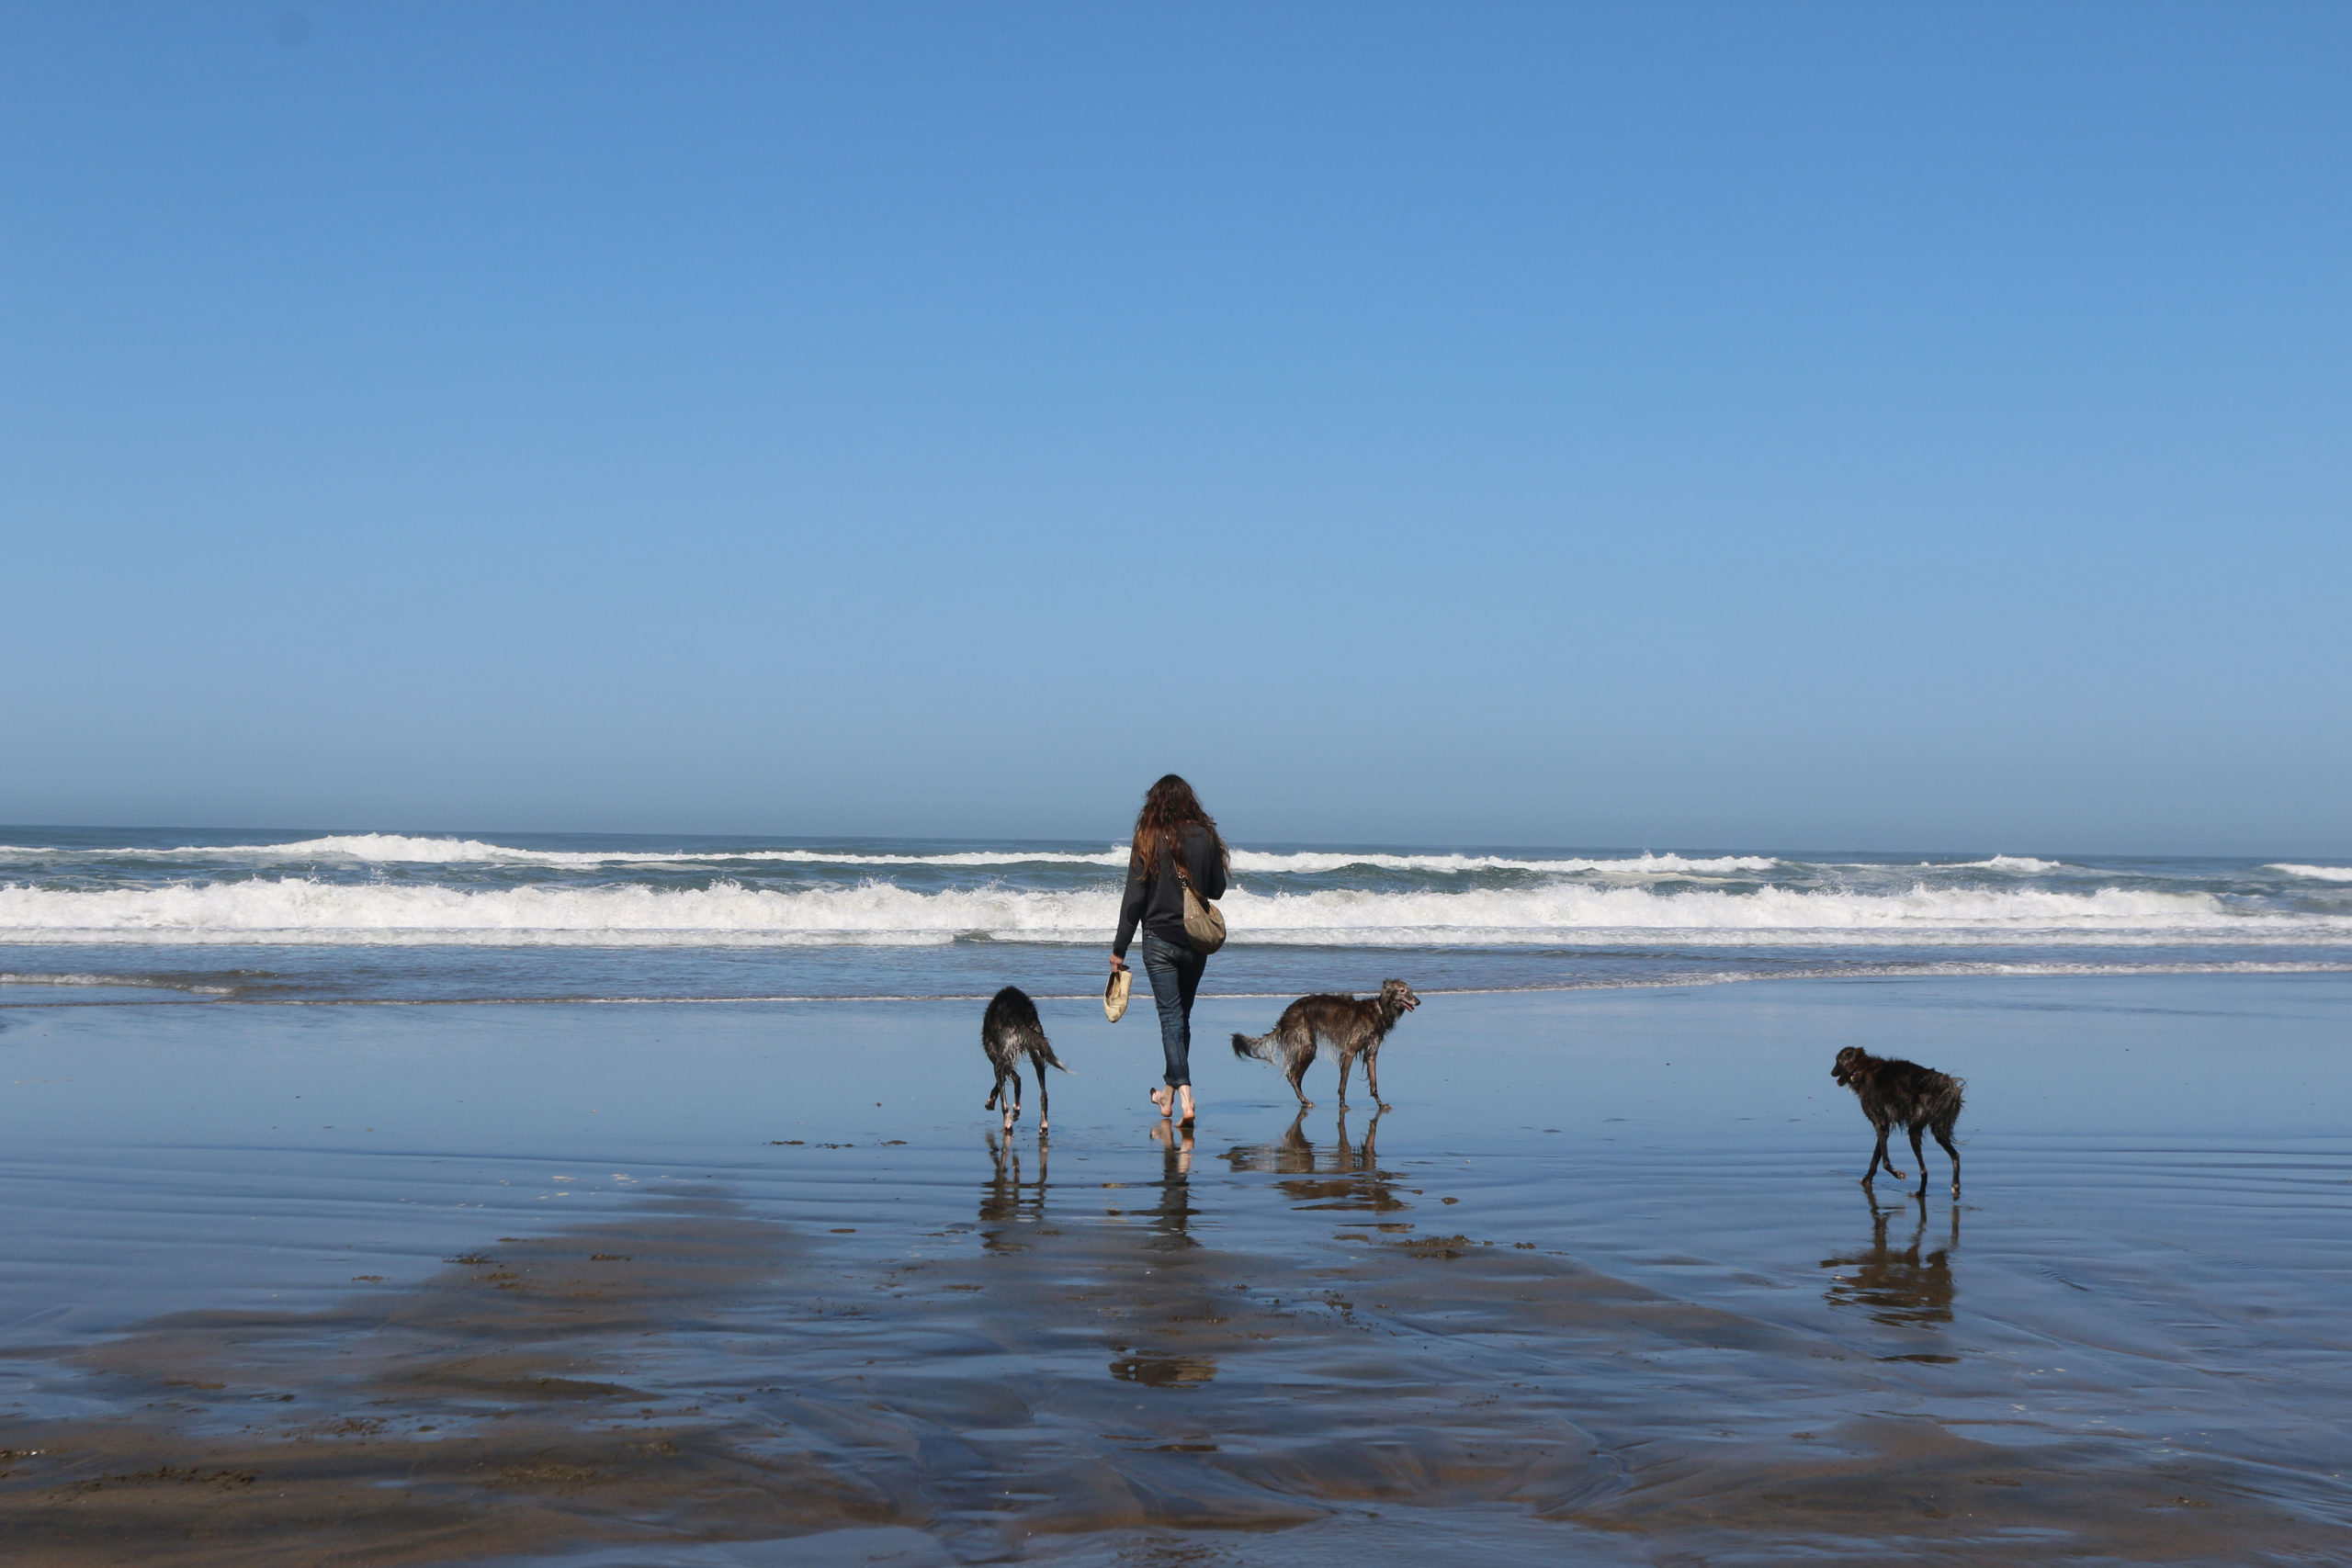 Three silkens on the beach with a woman. Photo credit: Joyce Chin